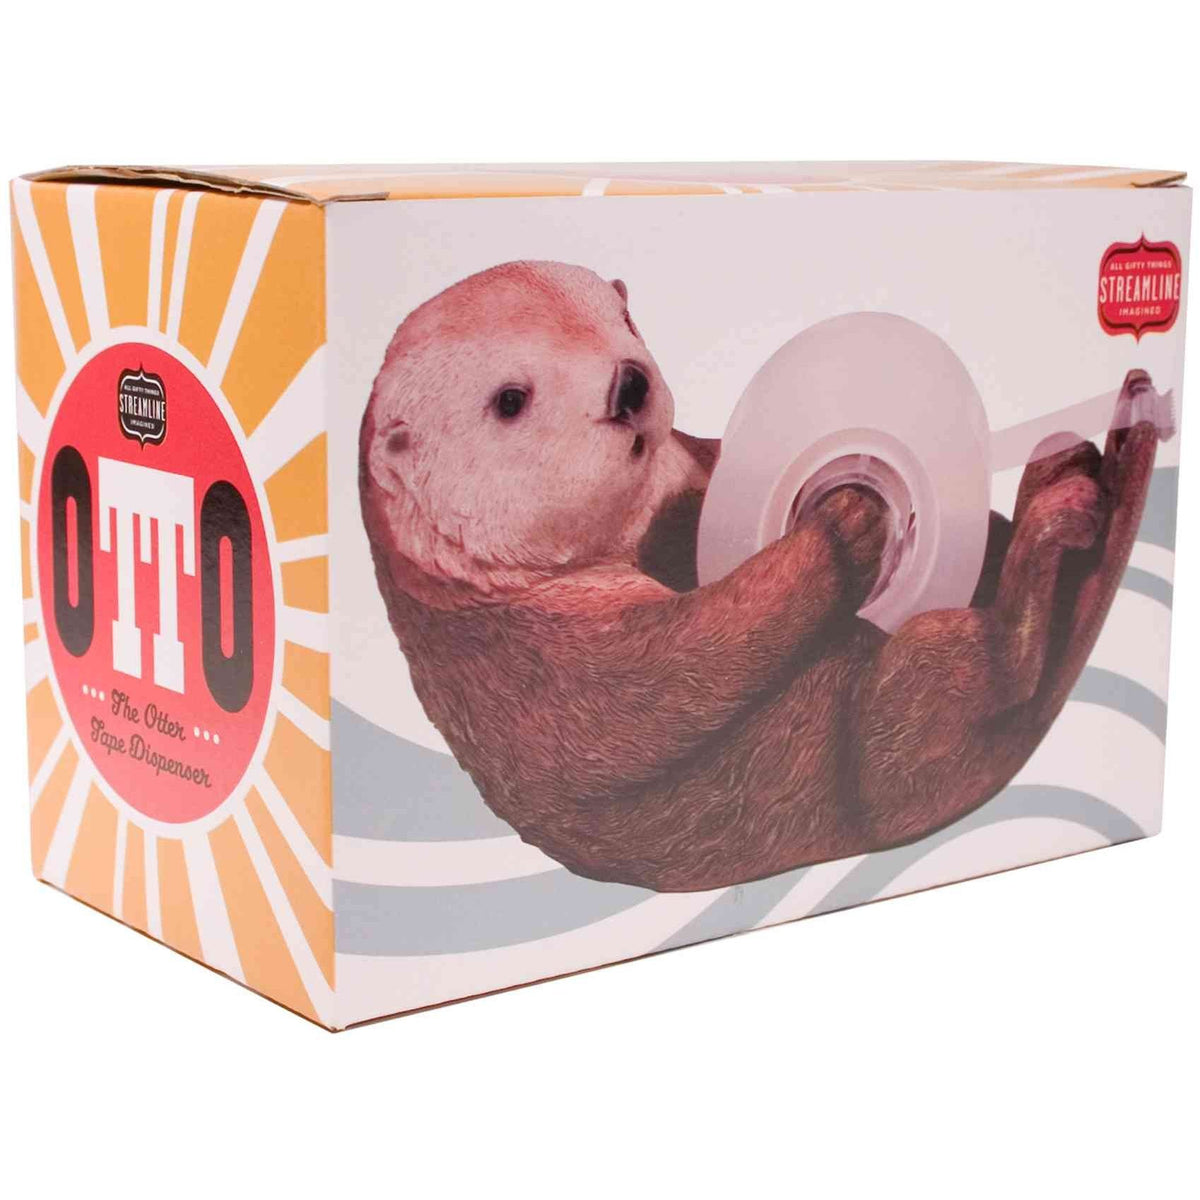 Otter Tape Dispenser: Nature's most playful animal on your desk!